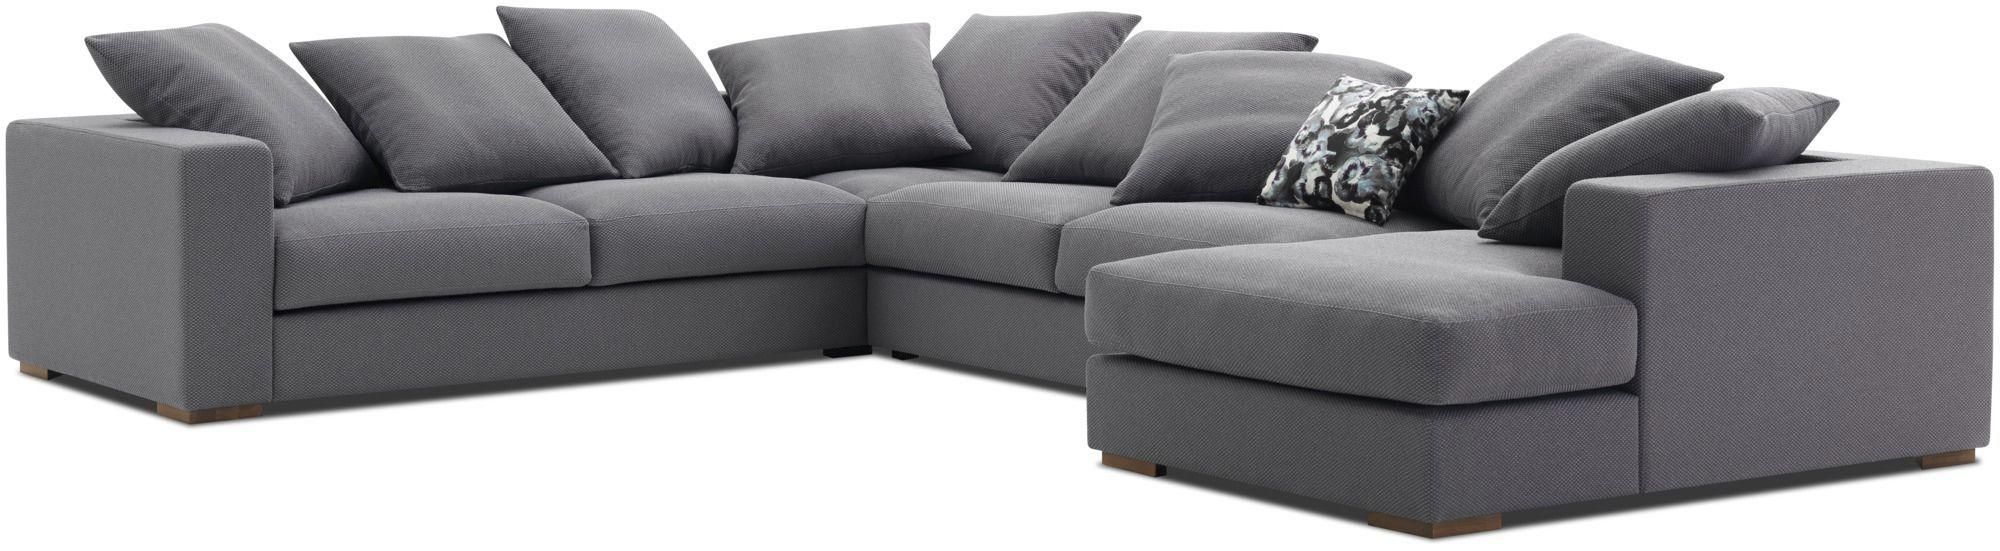 Corner Sofa / Modular / Contemporary / Leather – Cenova – Boconcept Within Modular Corner Sofas (View 1 of 20)